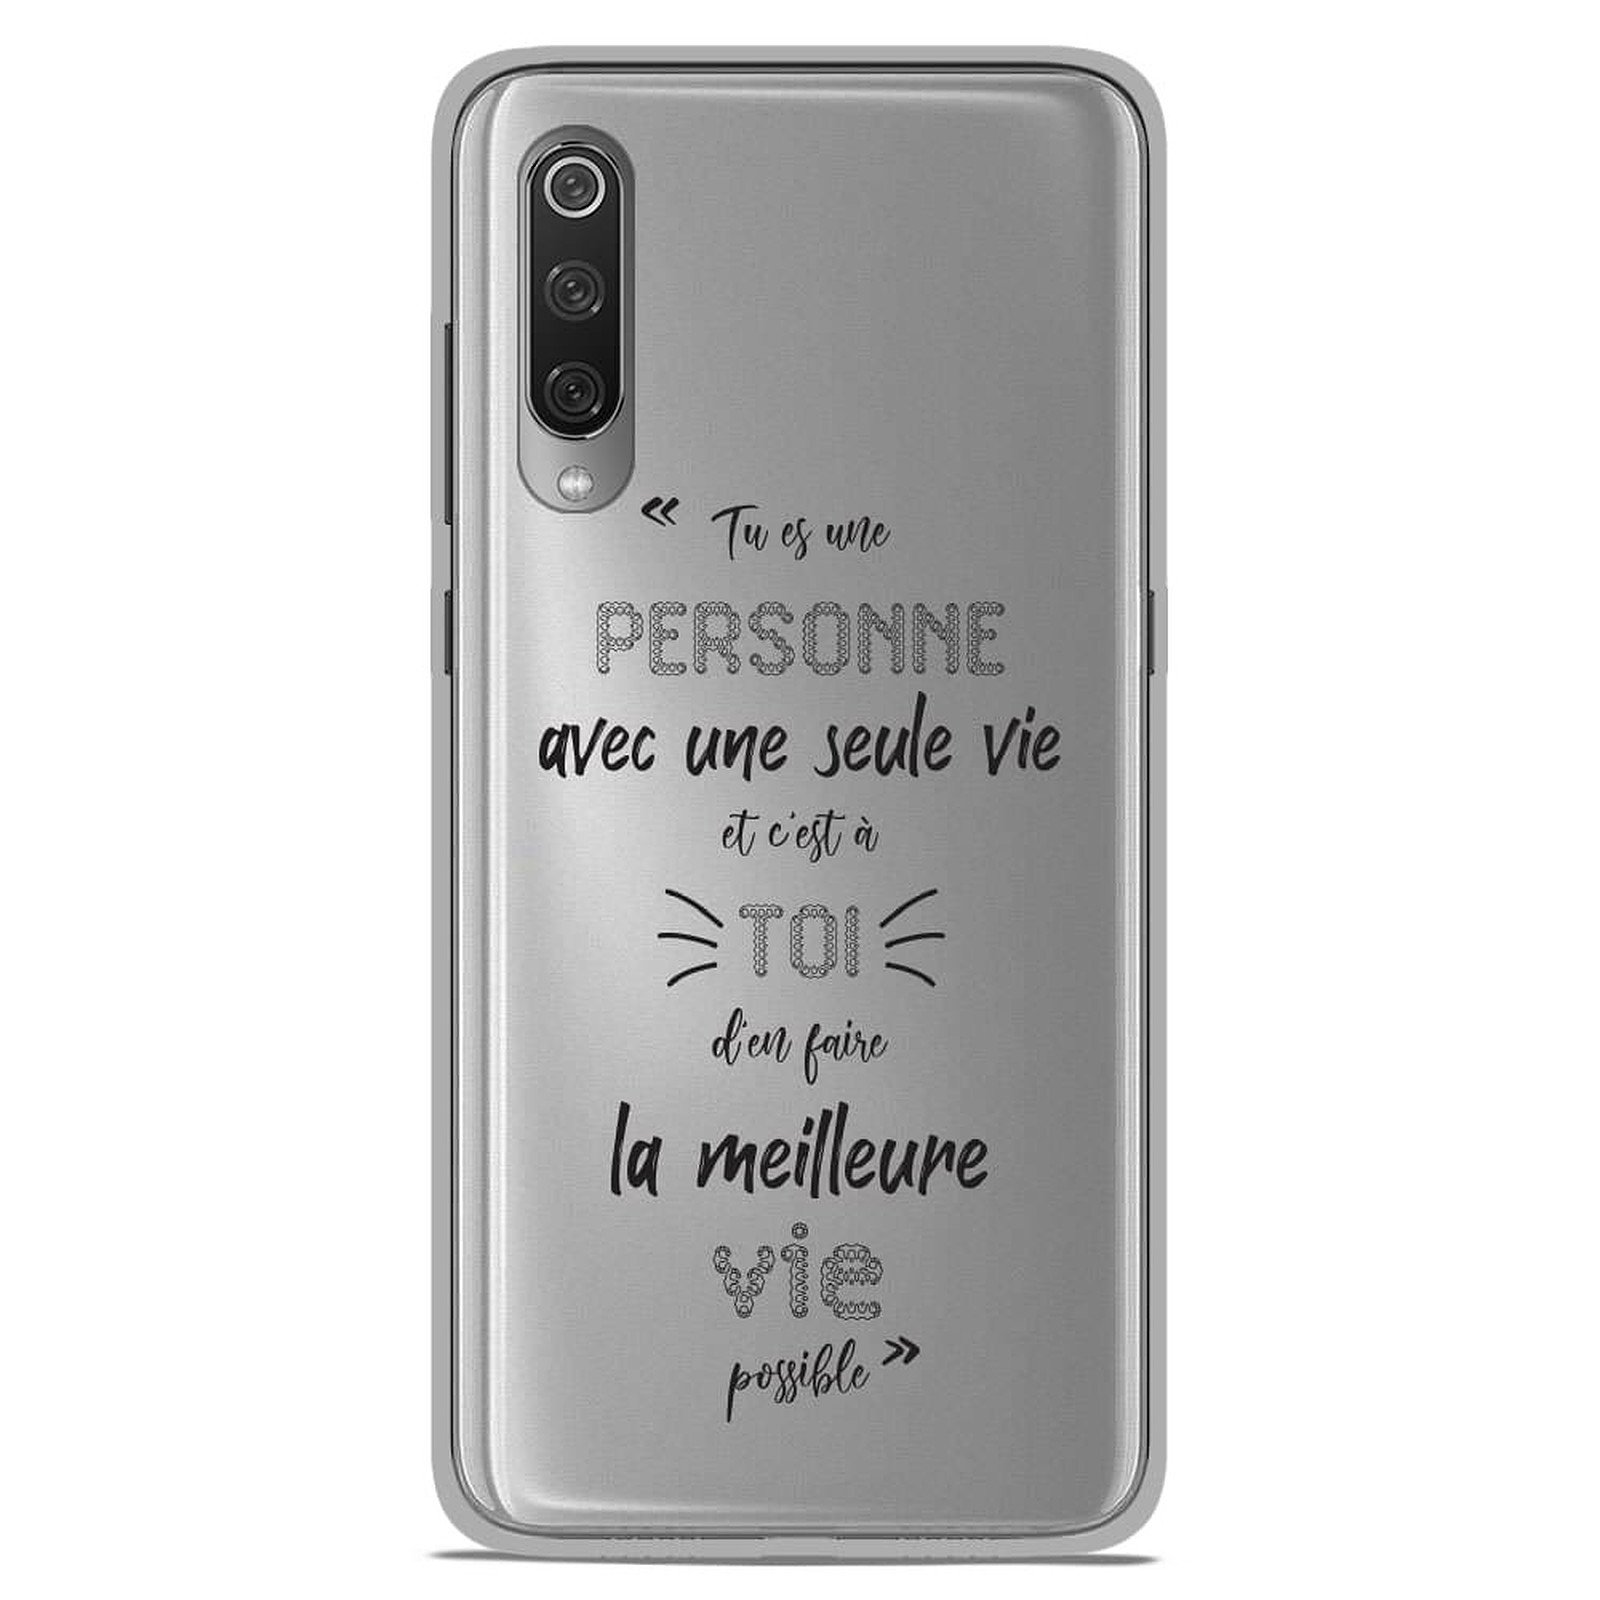 1001 Coques Coque silicone gel Xiaomi Mi 9 / Mi 9 Pro motif Une Seule Vie - Coque telephone 1001Coques